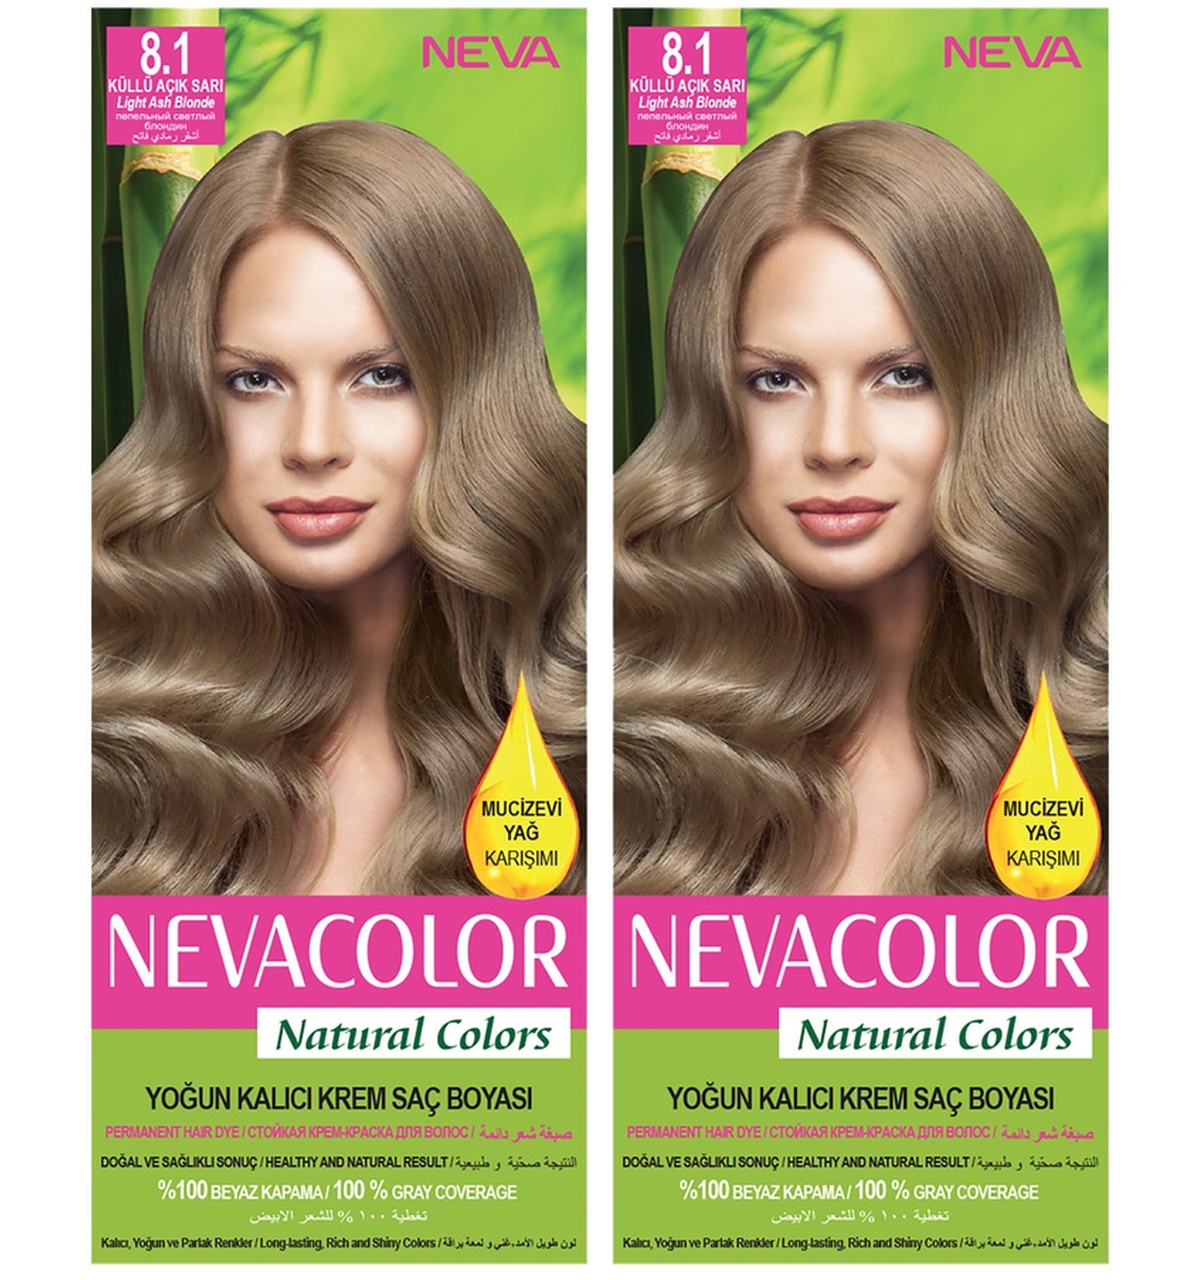 Neva Color Natural Color Saç Boyası 8.1 Küllü Açık Sarı 2'li Set